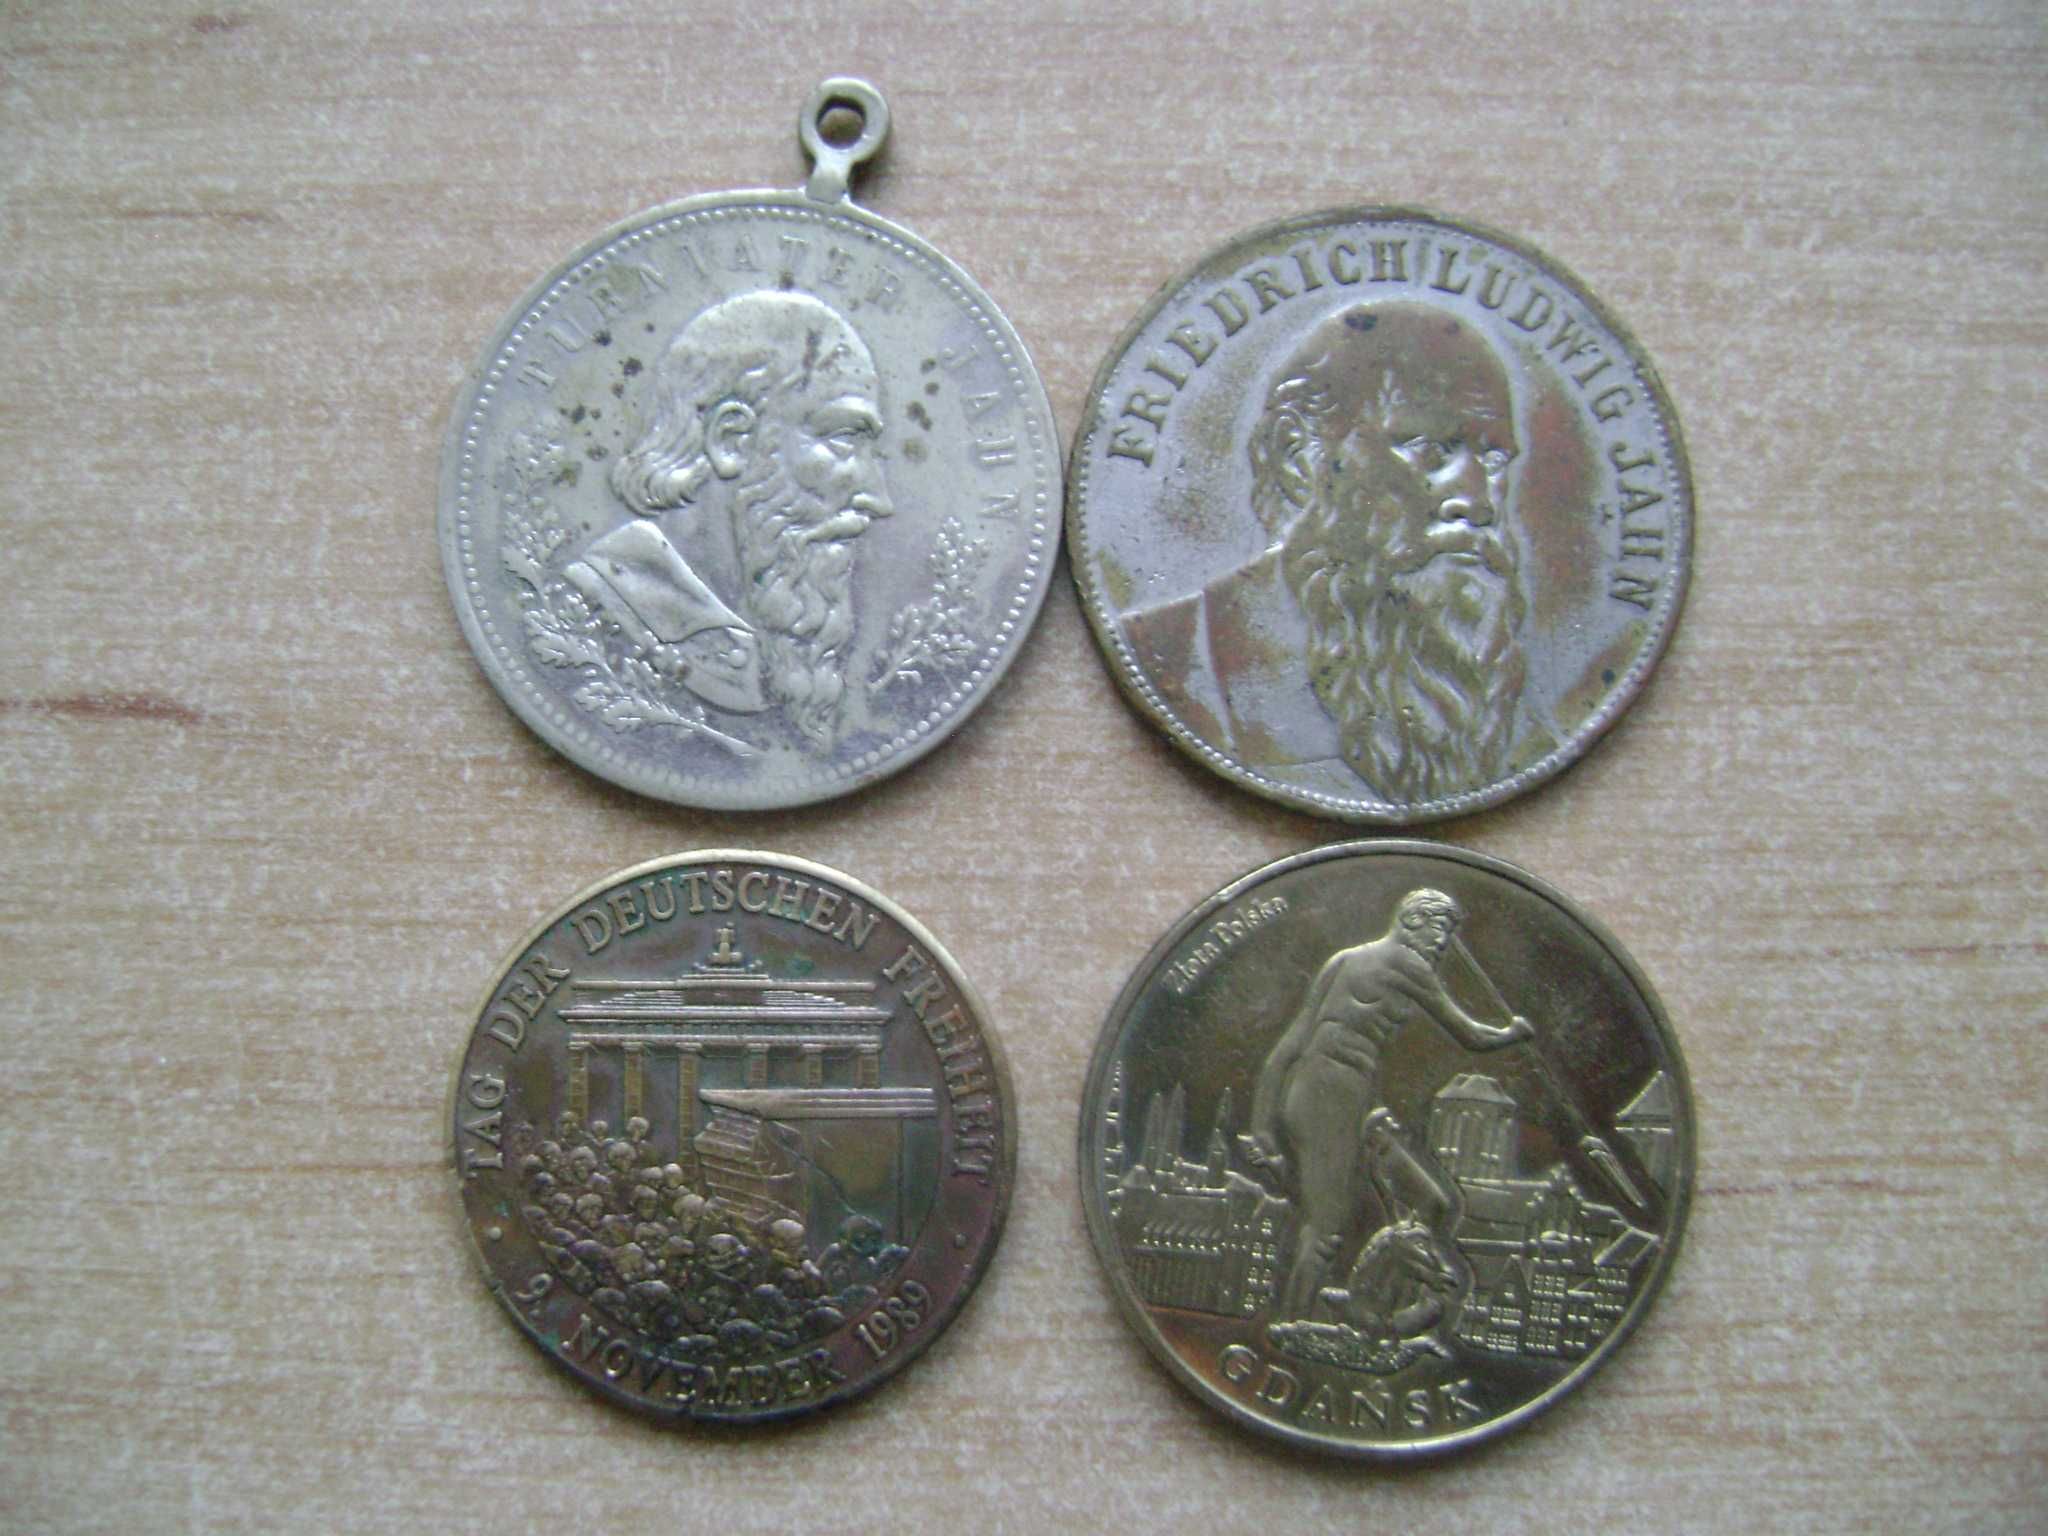 Starocie z PRL - Medal jeden z Zestawu 11 medali TANIO